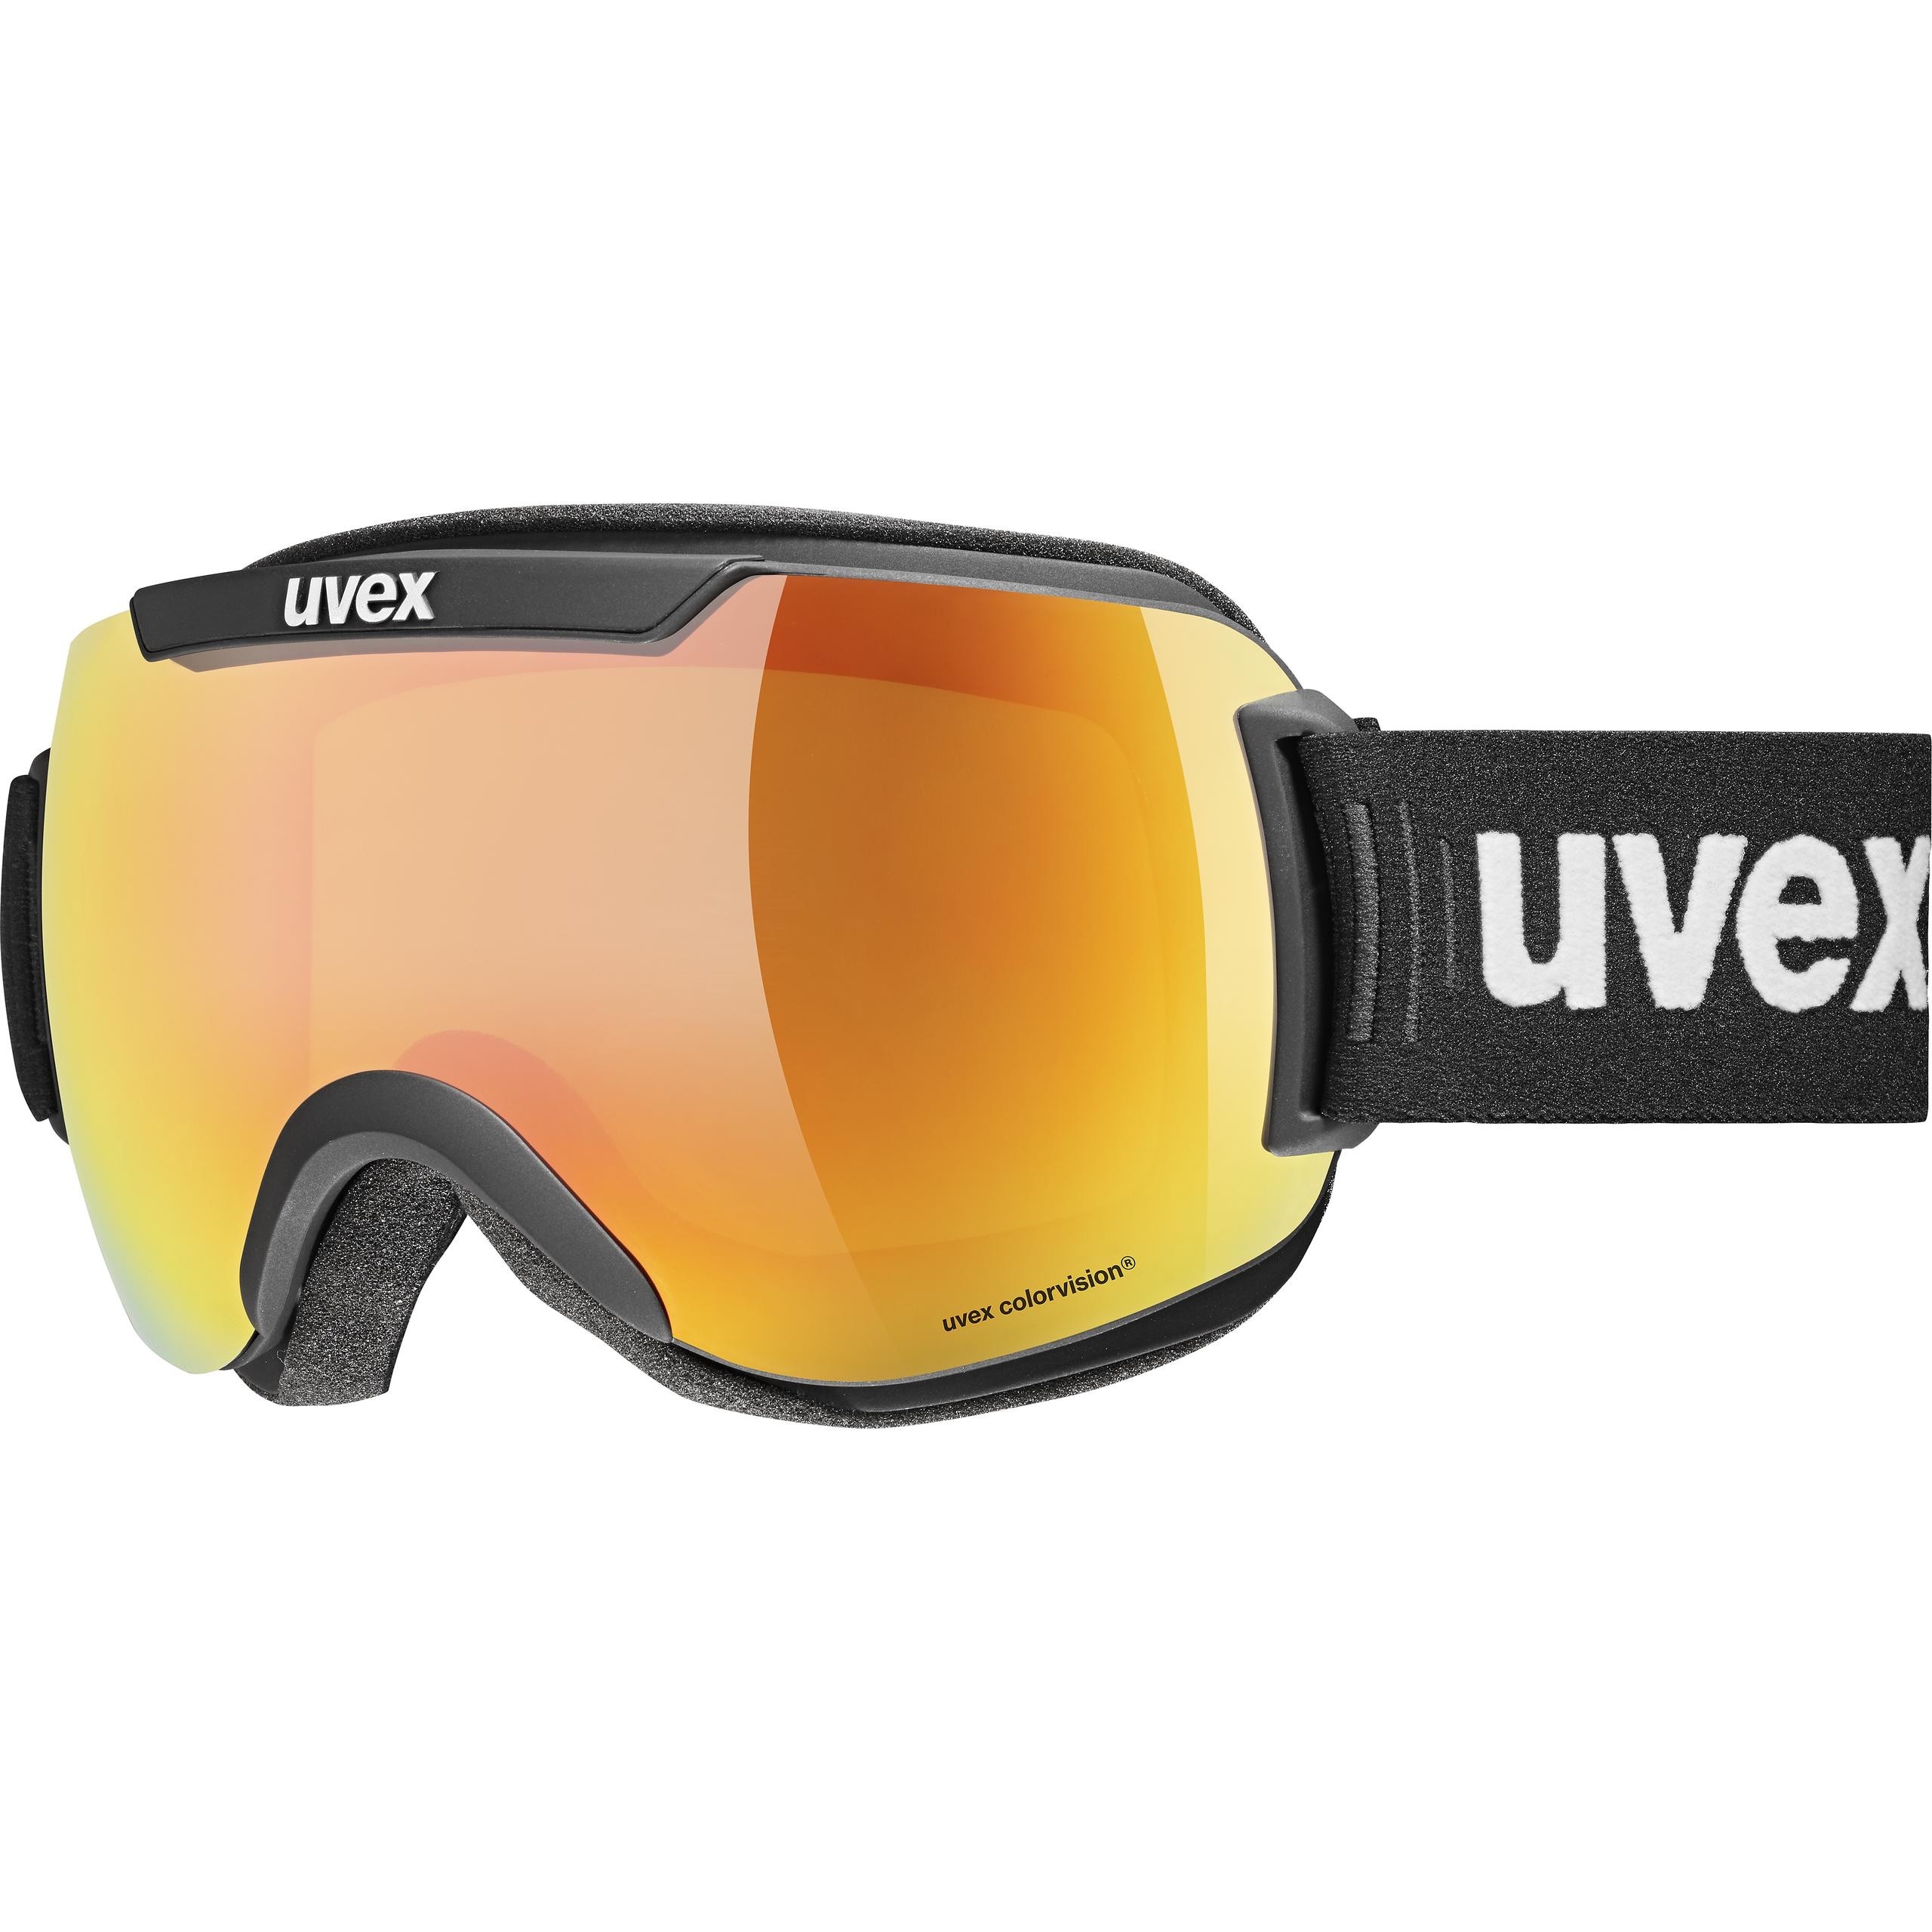 Uvex Downhill 2000 CV black ski goggles